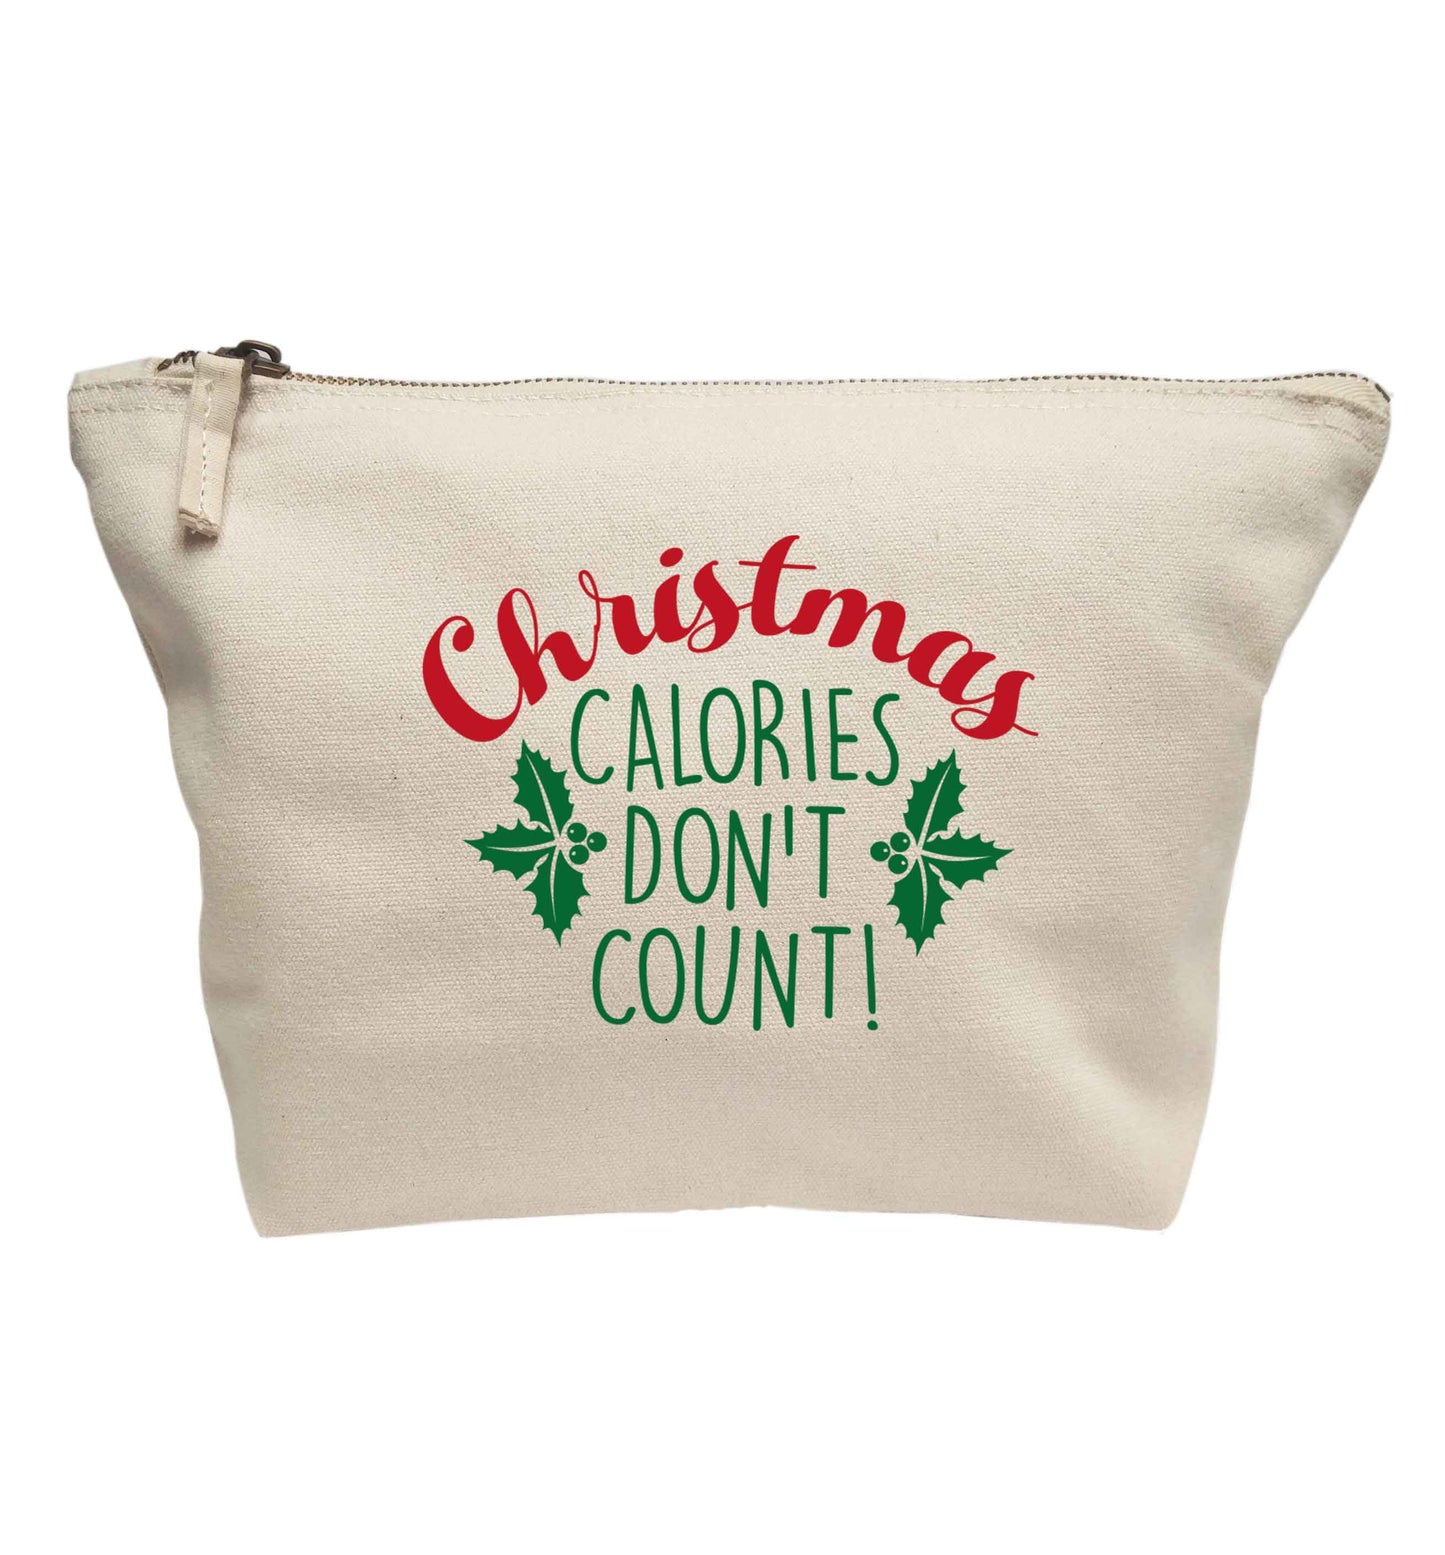 Christmas calories don't count | Makeup / wash bag